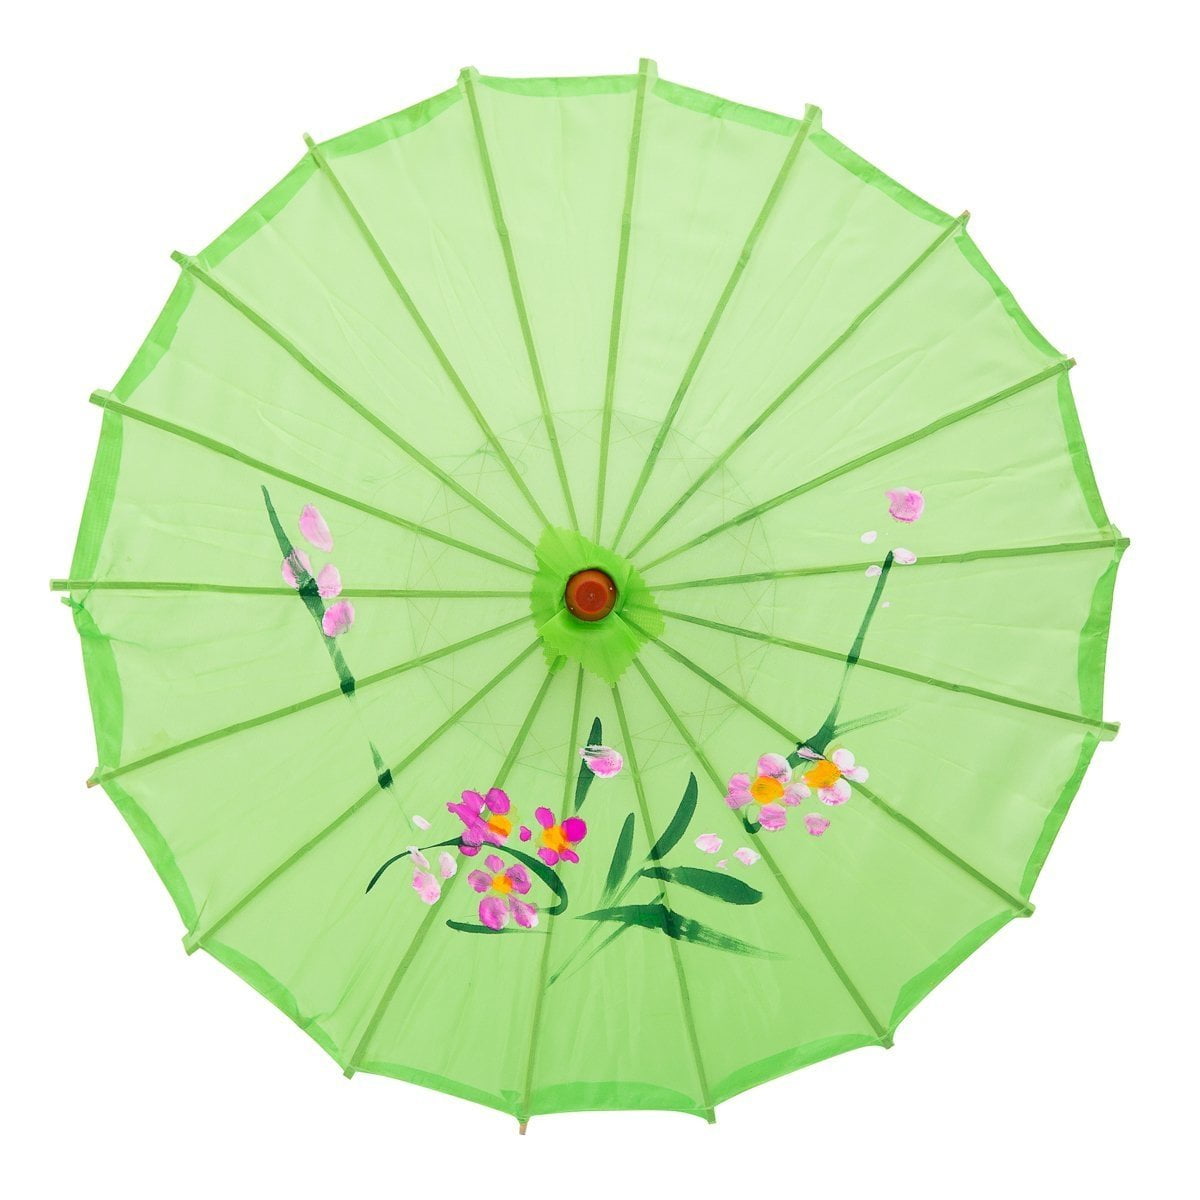 Chinese Paper Umbrella - Arts Umbrella Stock Image - Image of artistic,  festive: 41293829